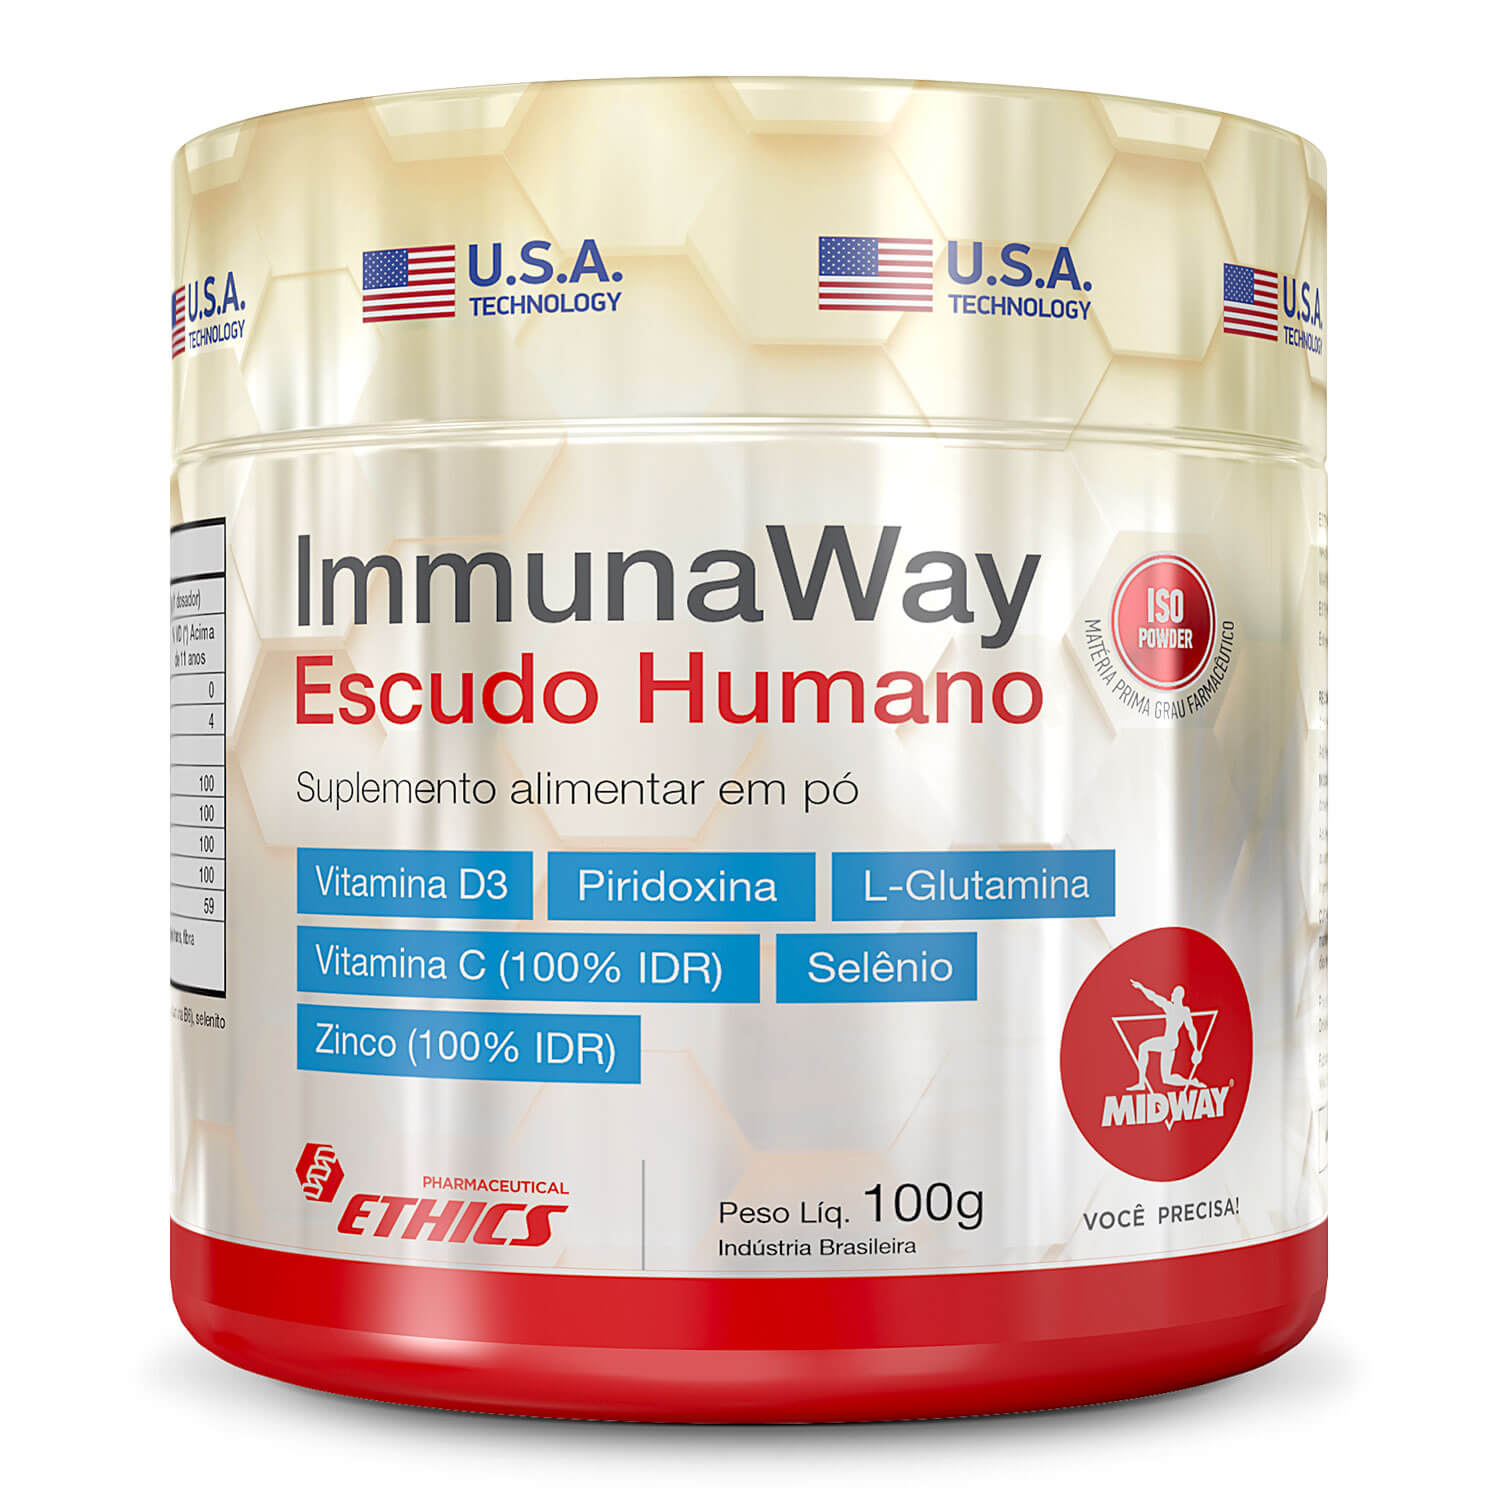 Immuna Way Escudo Humano